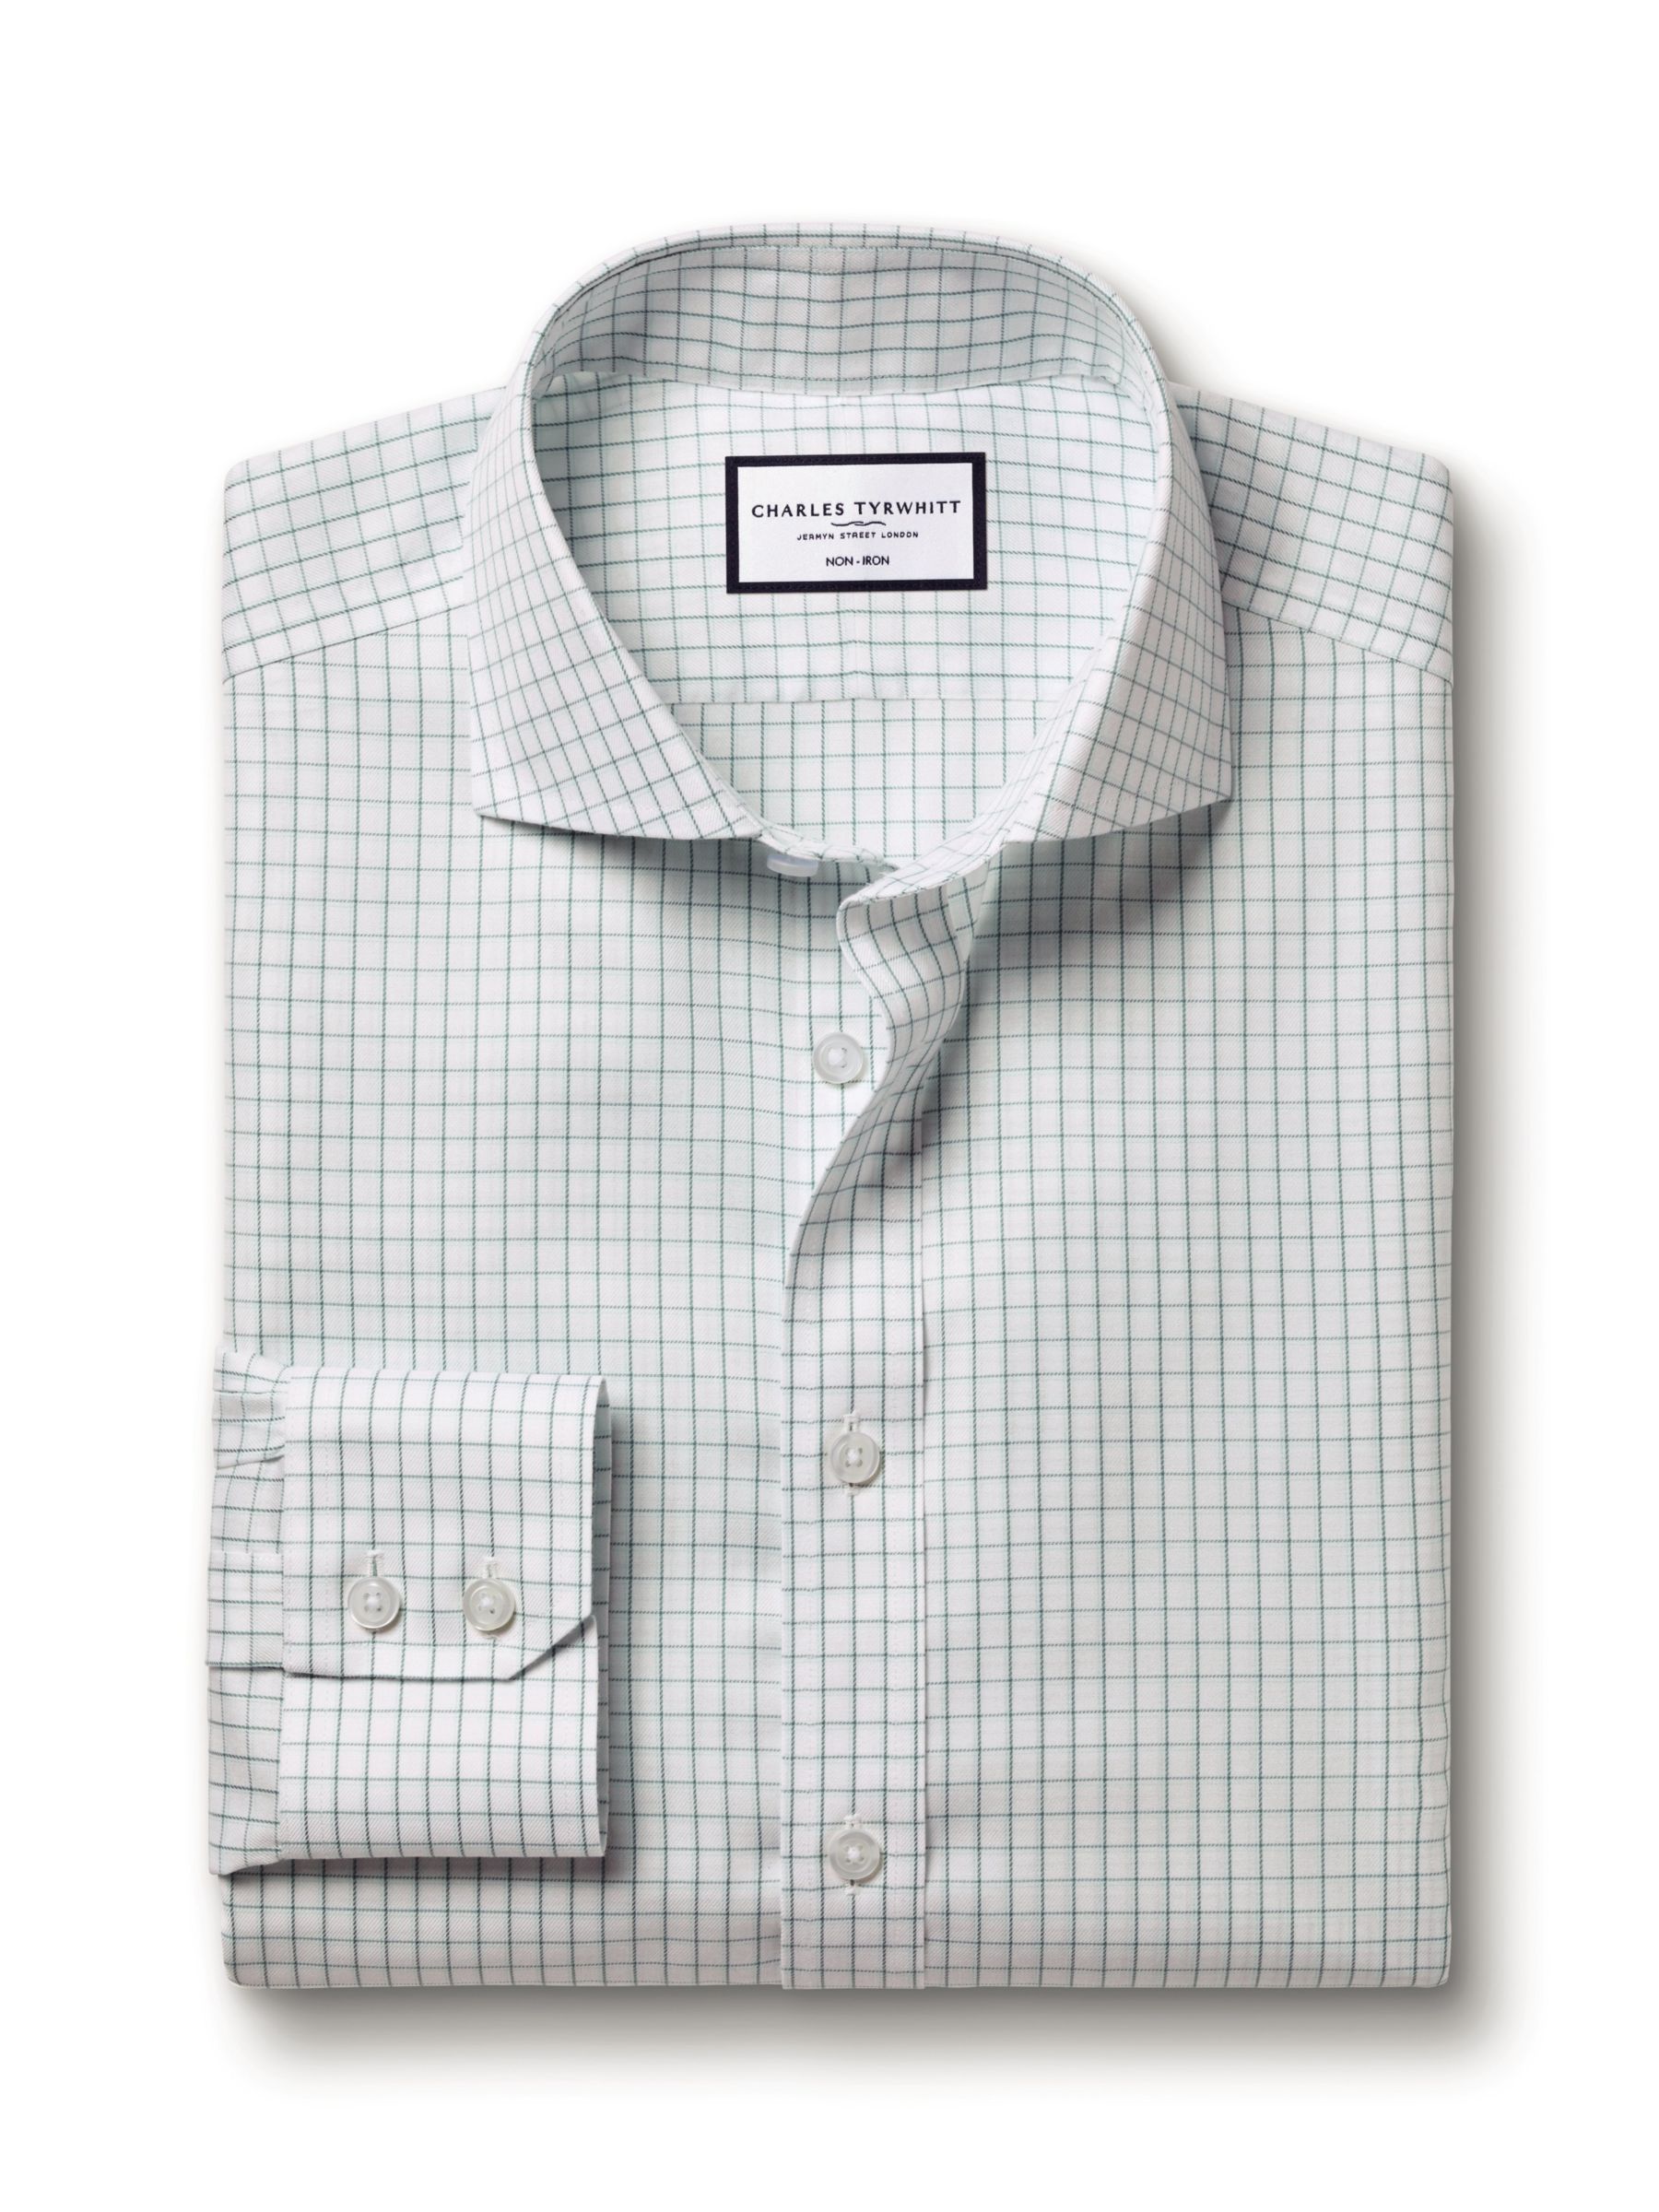 Charles Tyrwhitt Key Check Non-Iron Twill Shirt, Atlantic Green, 15 33